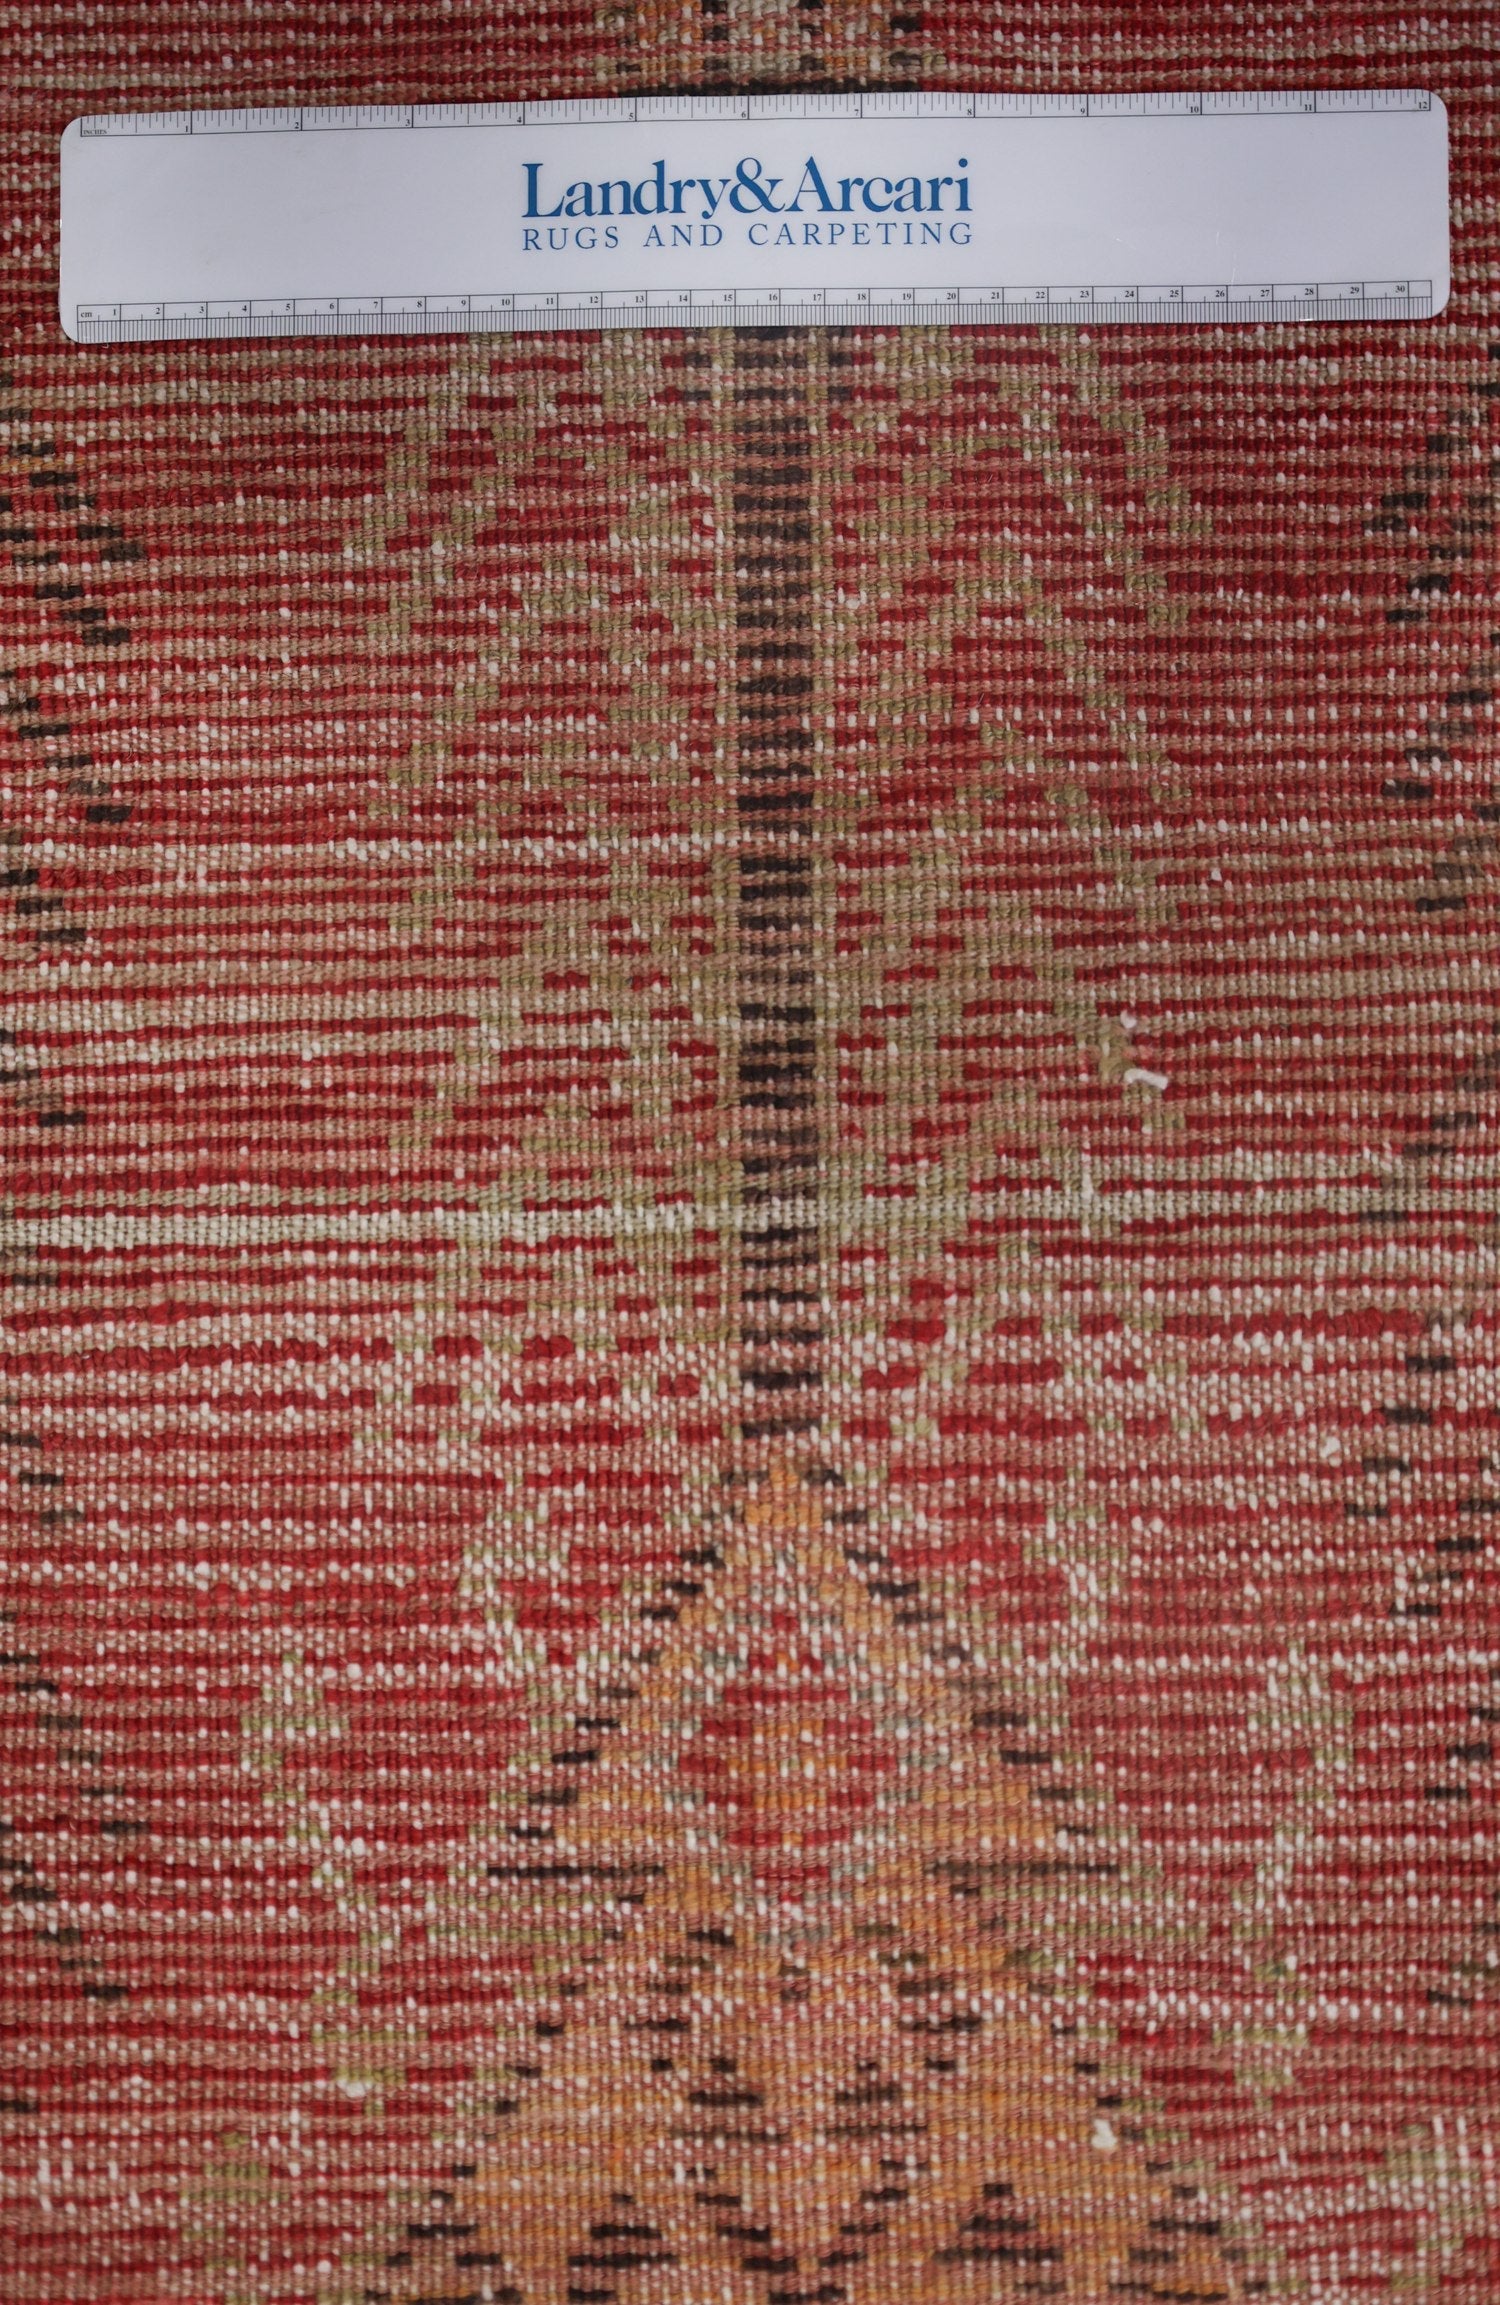 Vintage Konya Handwoven Tribal Rug, J72380